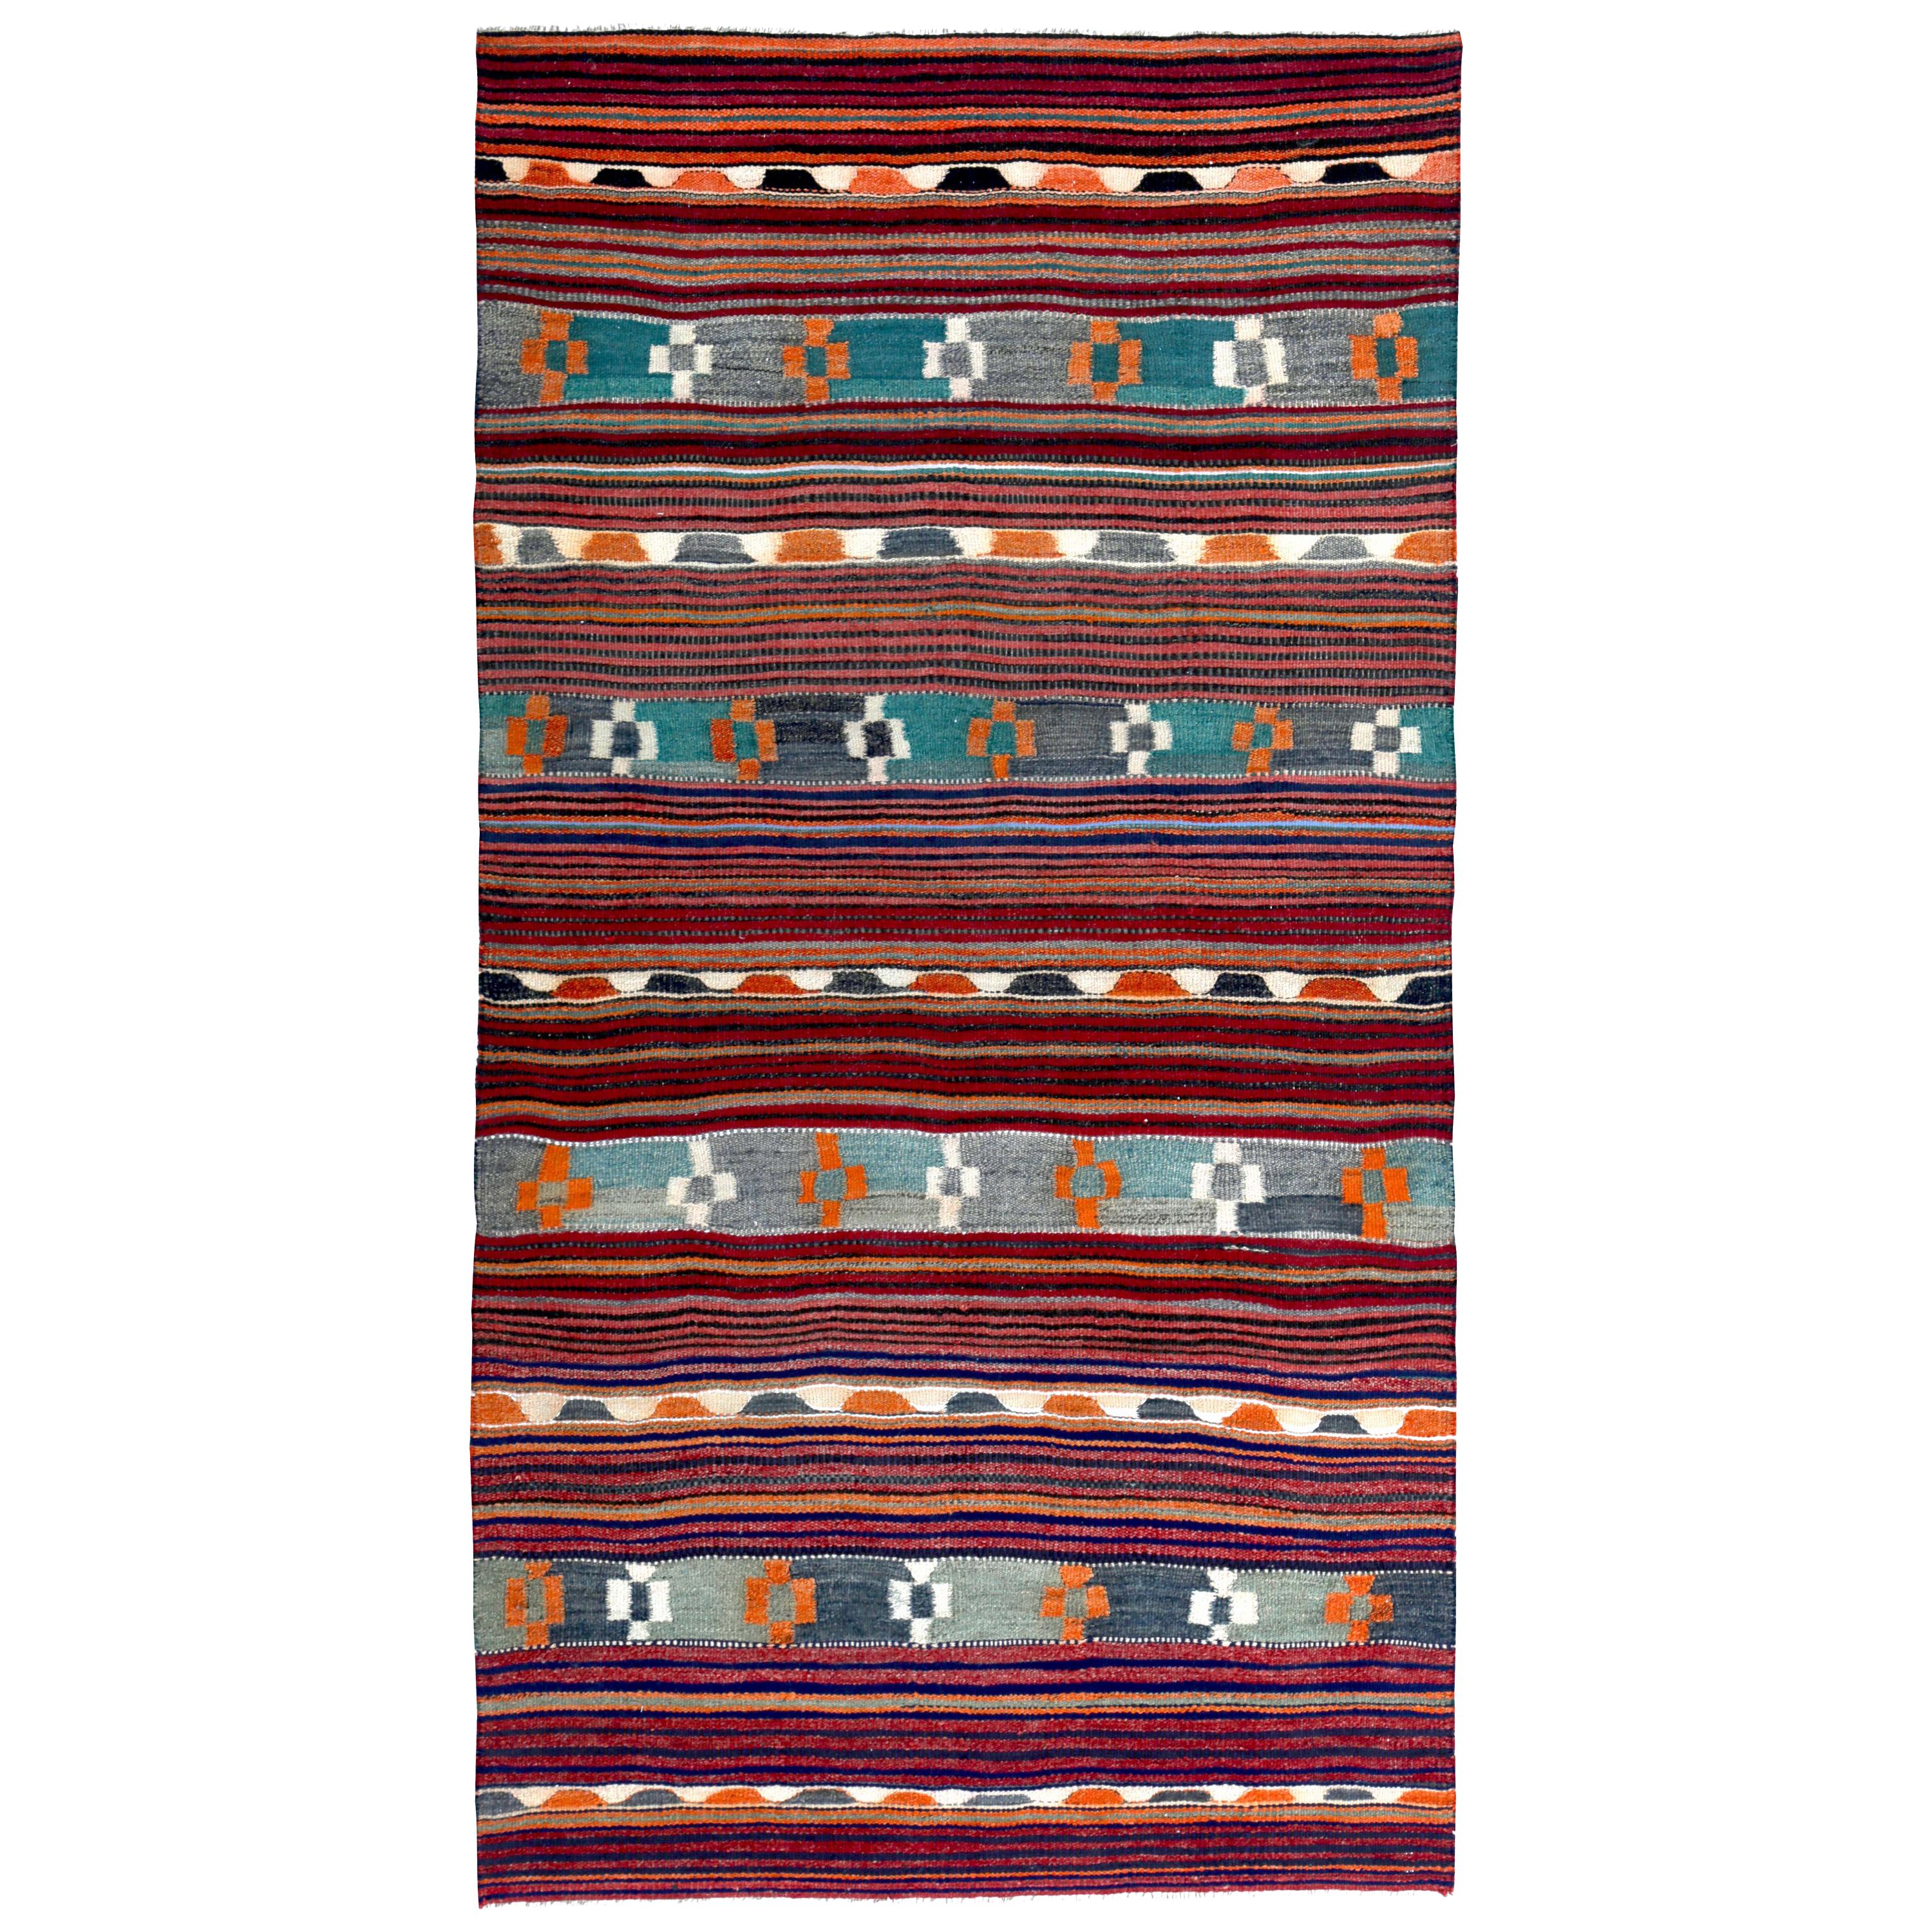 Modern Turkish Kilim Rug with Blue, Green & Orange Tribal Design in a Red Field